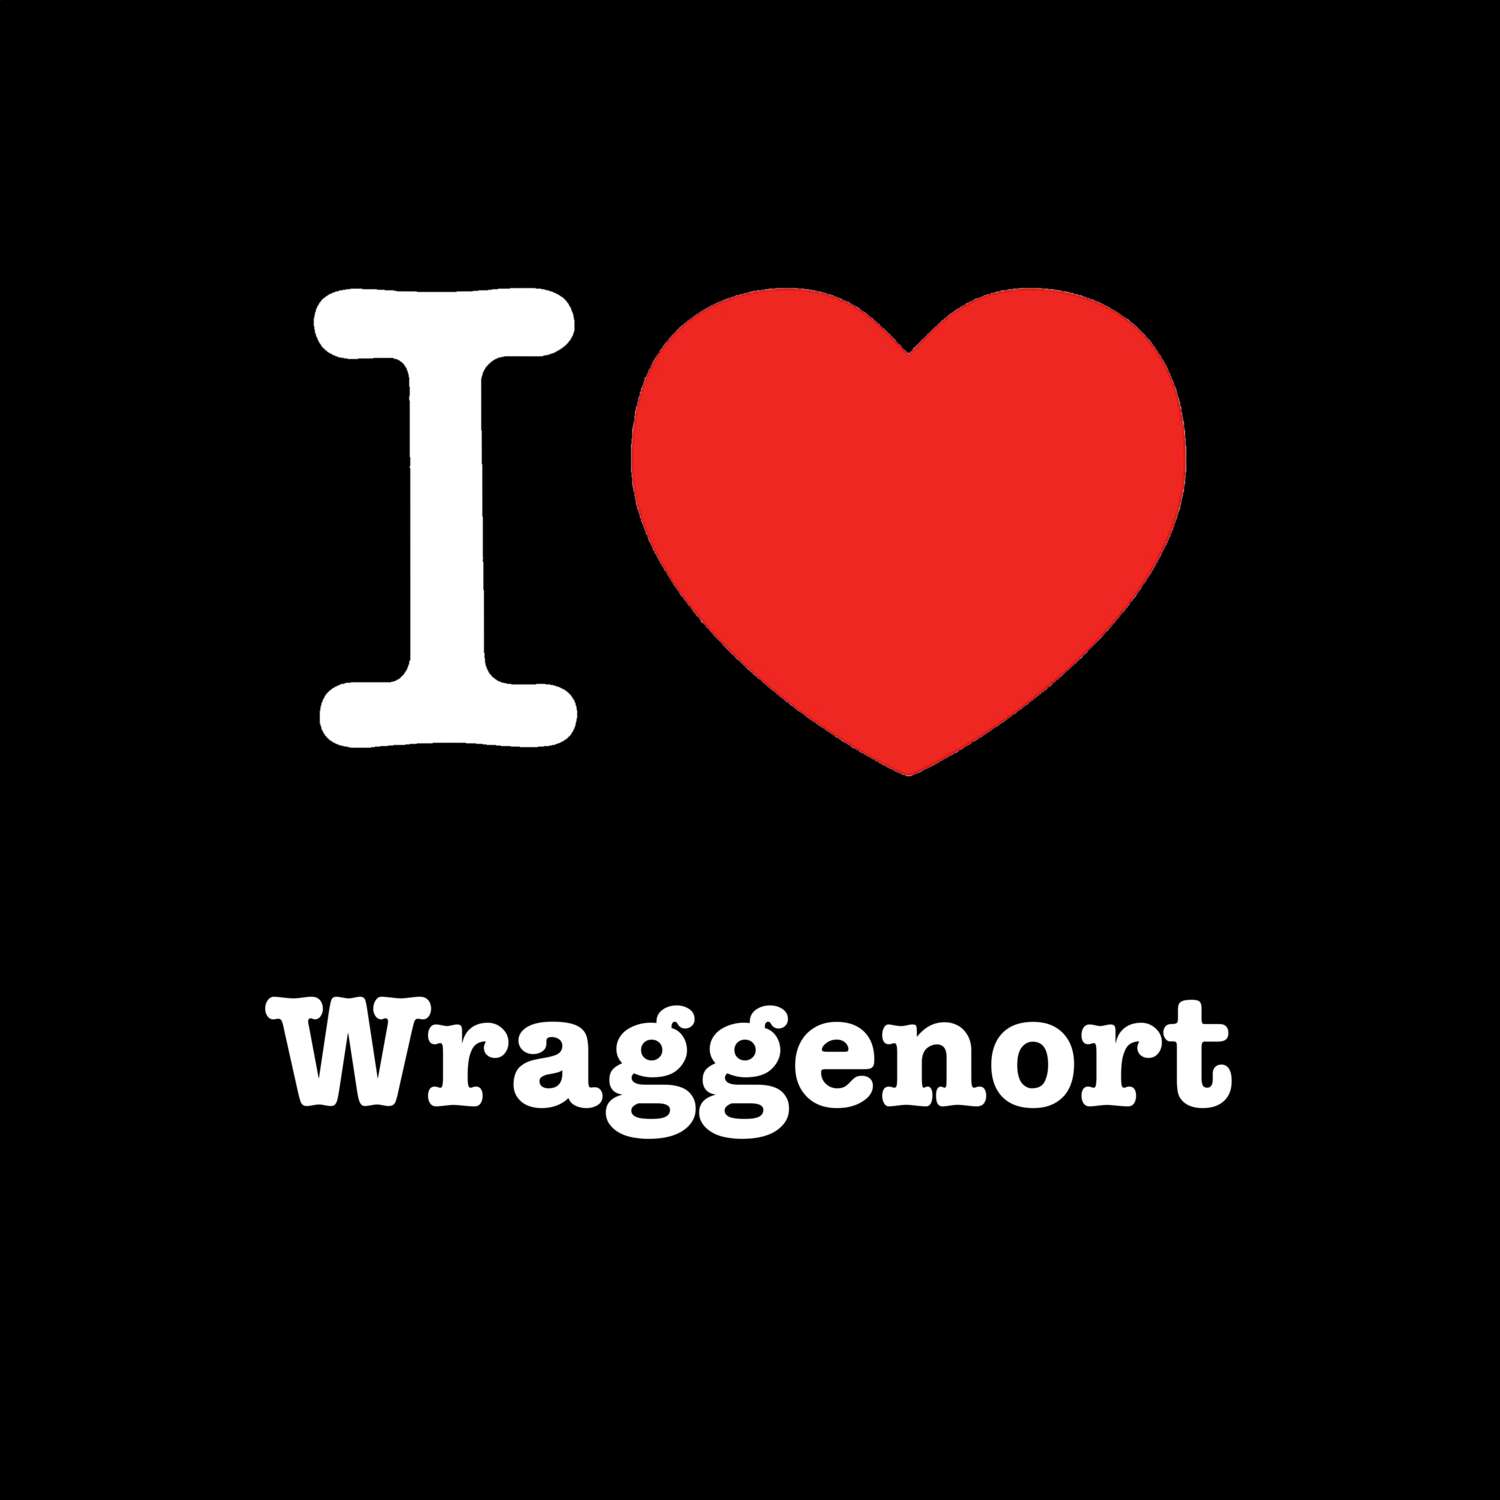 Wraggenort T-Shirt »I love«